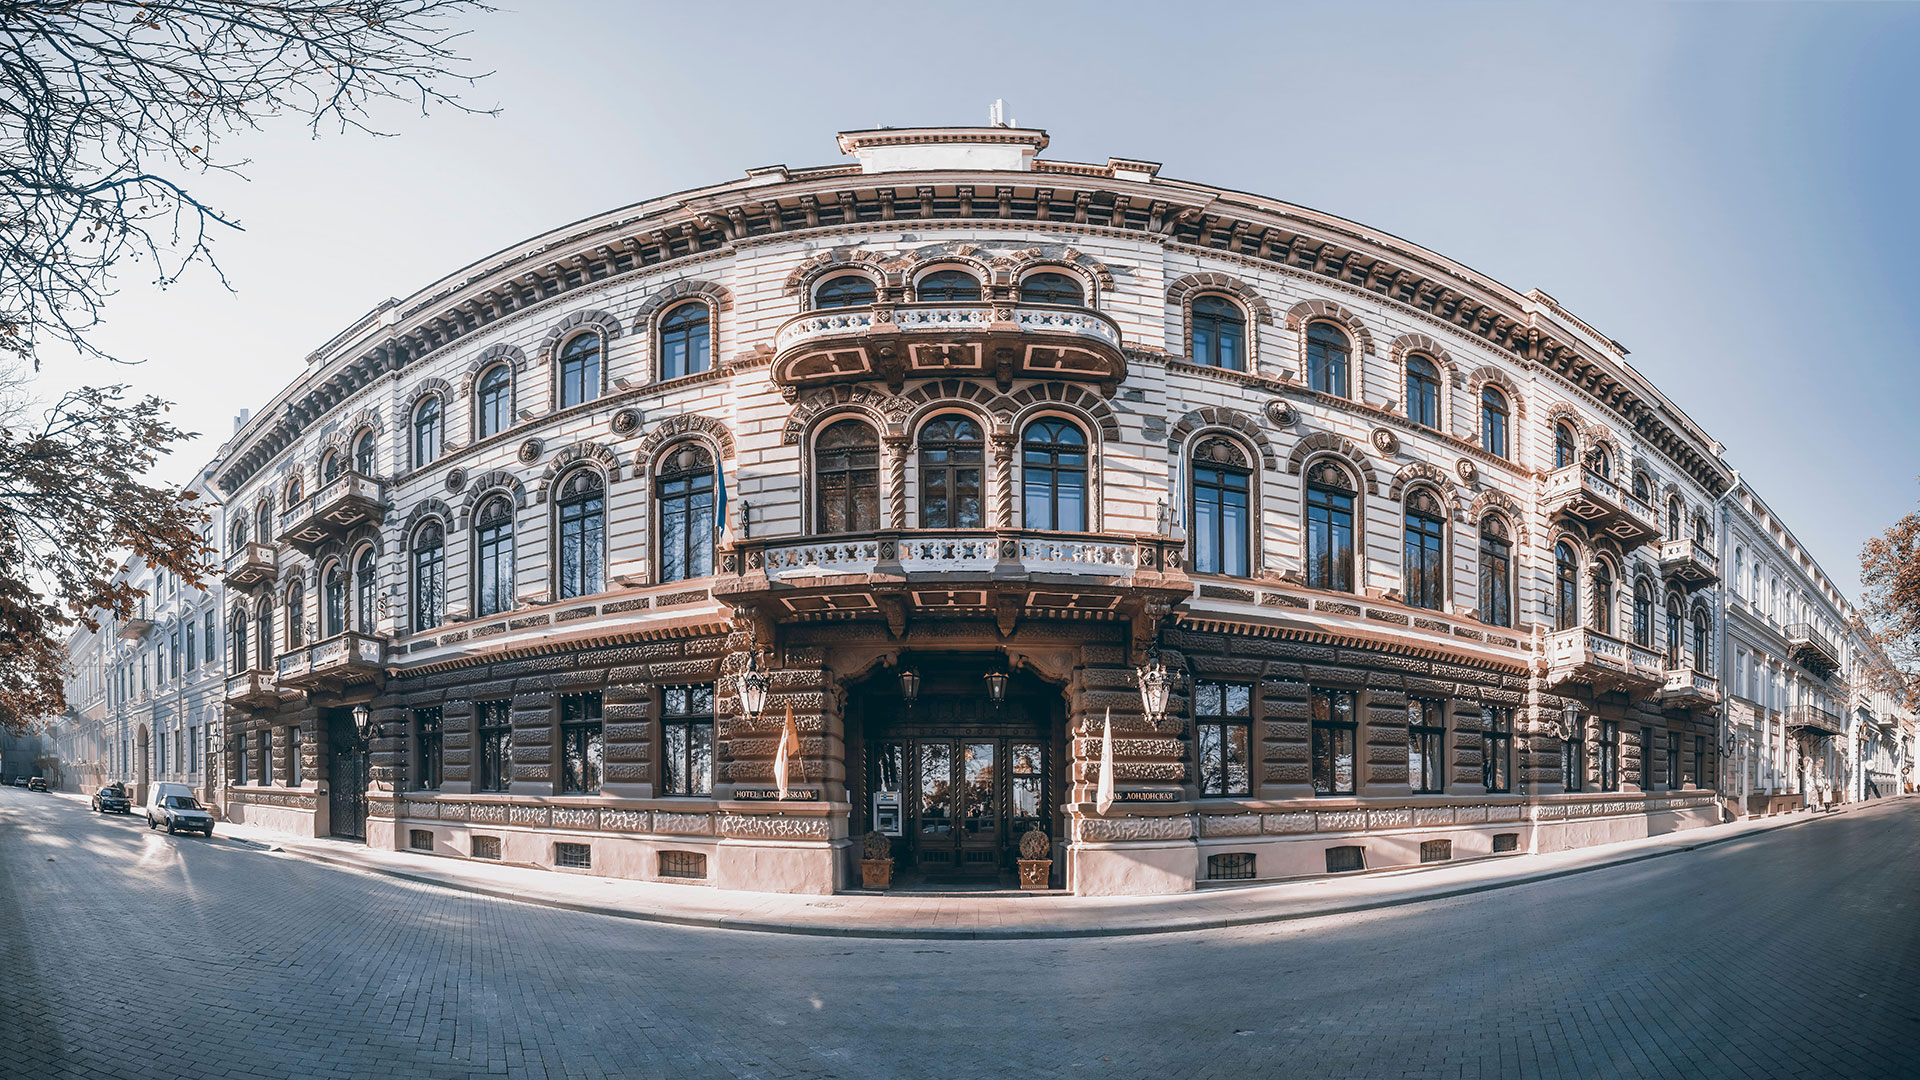 Odessa, Ukraine 12.08.2019. Londonskaya hotel in the historical center of Odessa, Ukraine
Grosby